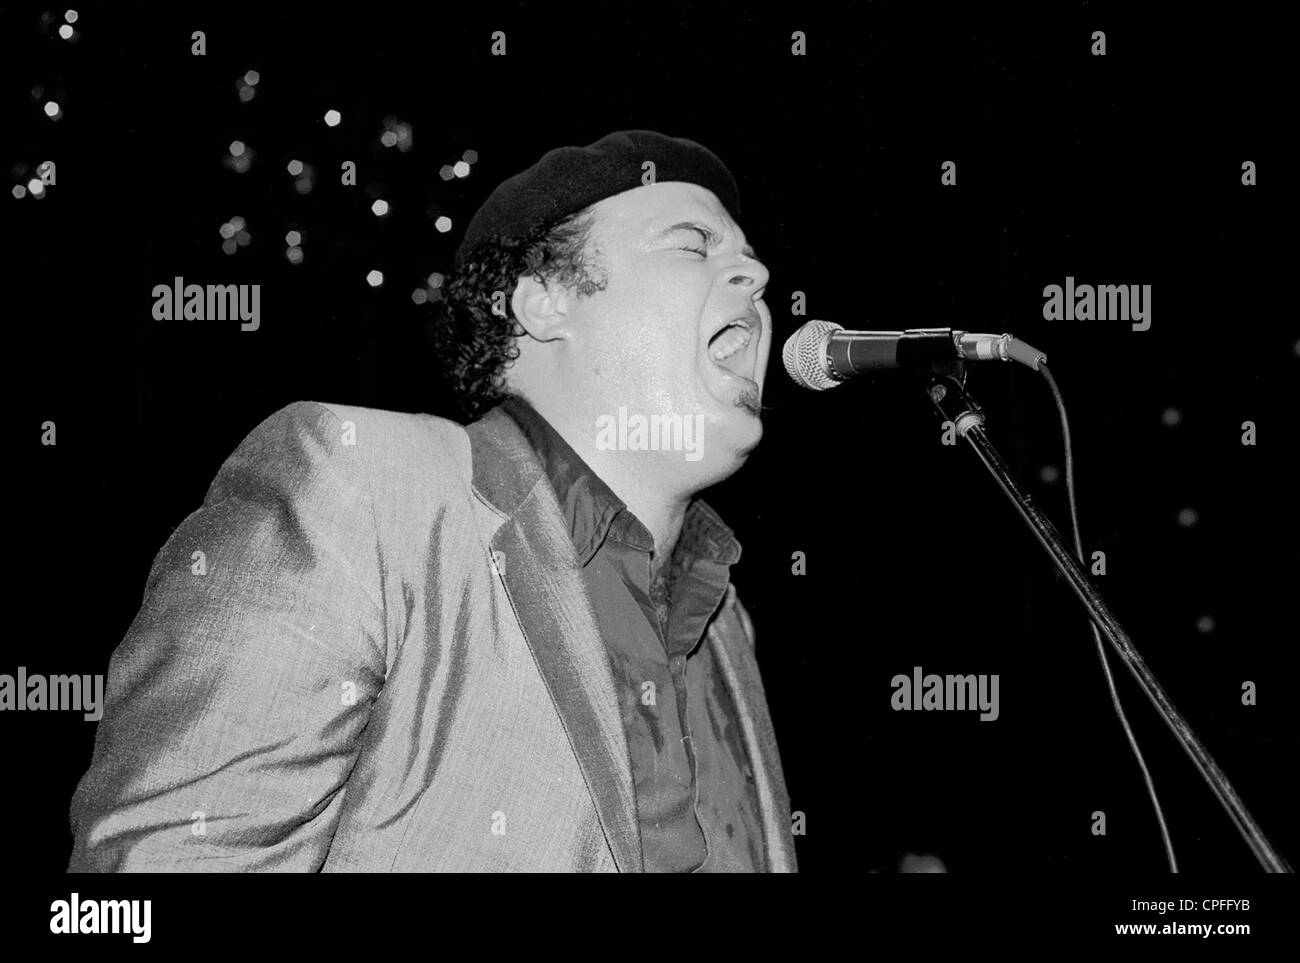 David Lynn Thomas, punk band Pere Ubu singer, in concert. Archival photo taken in Zagreb, Croatia, 1986. Stock Photo